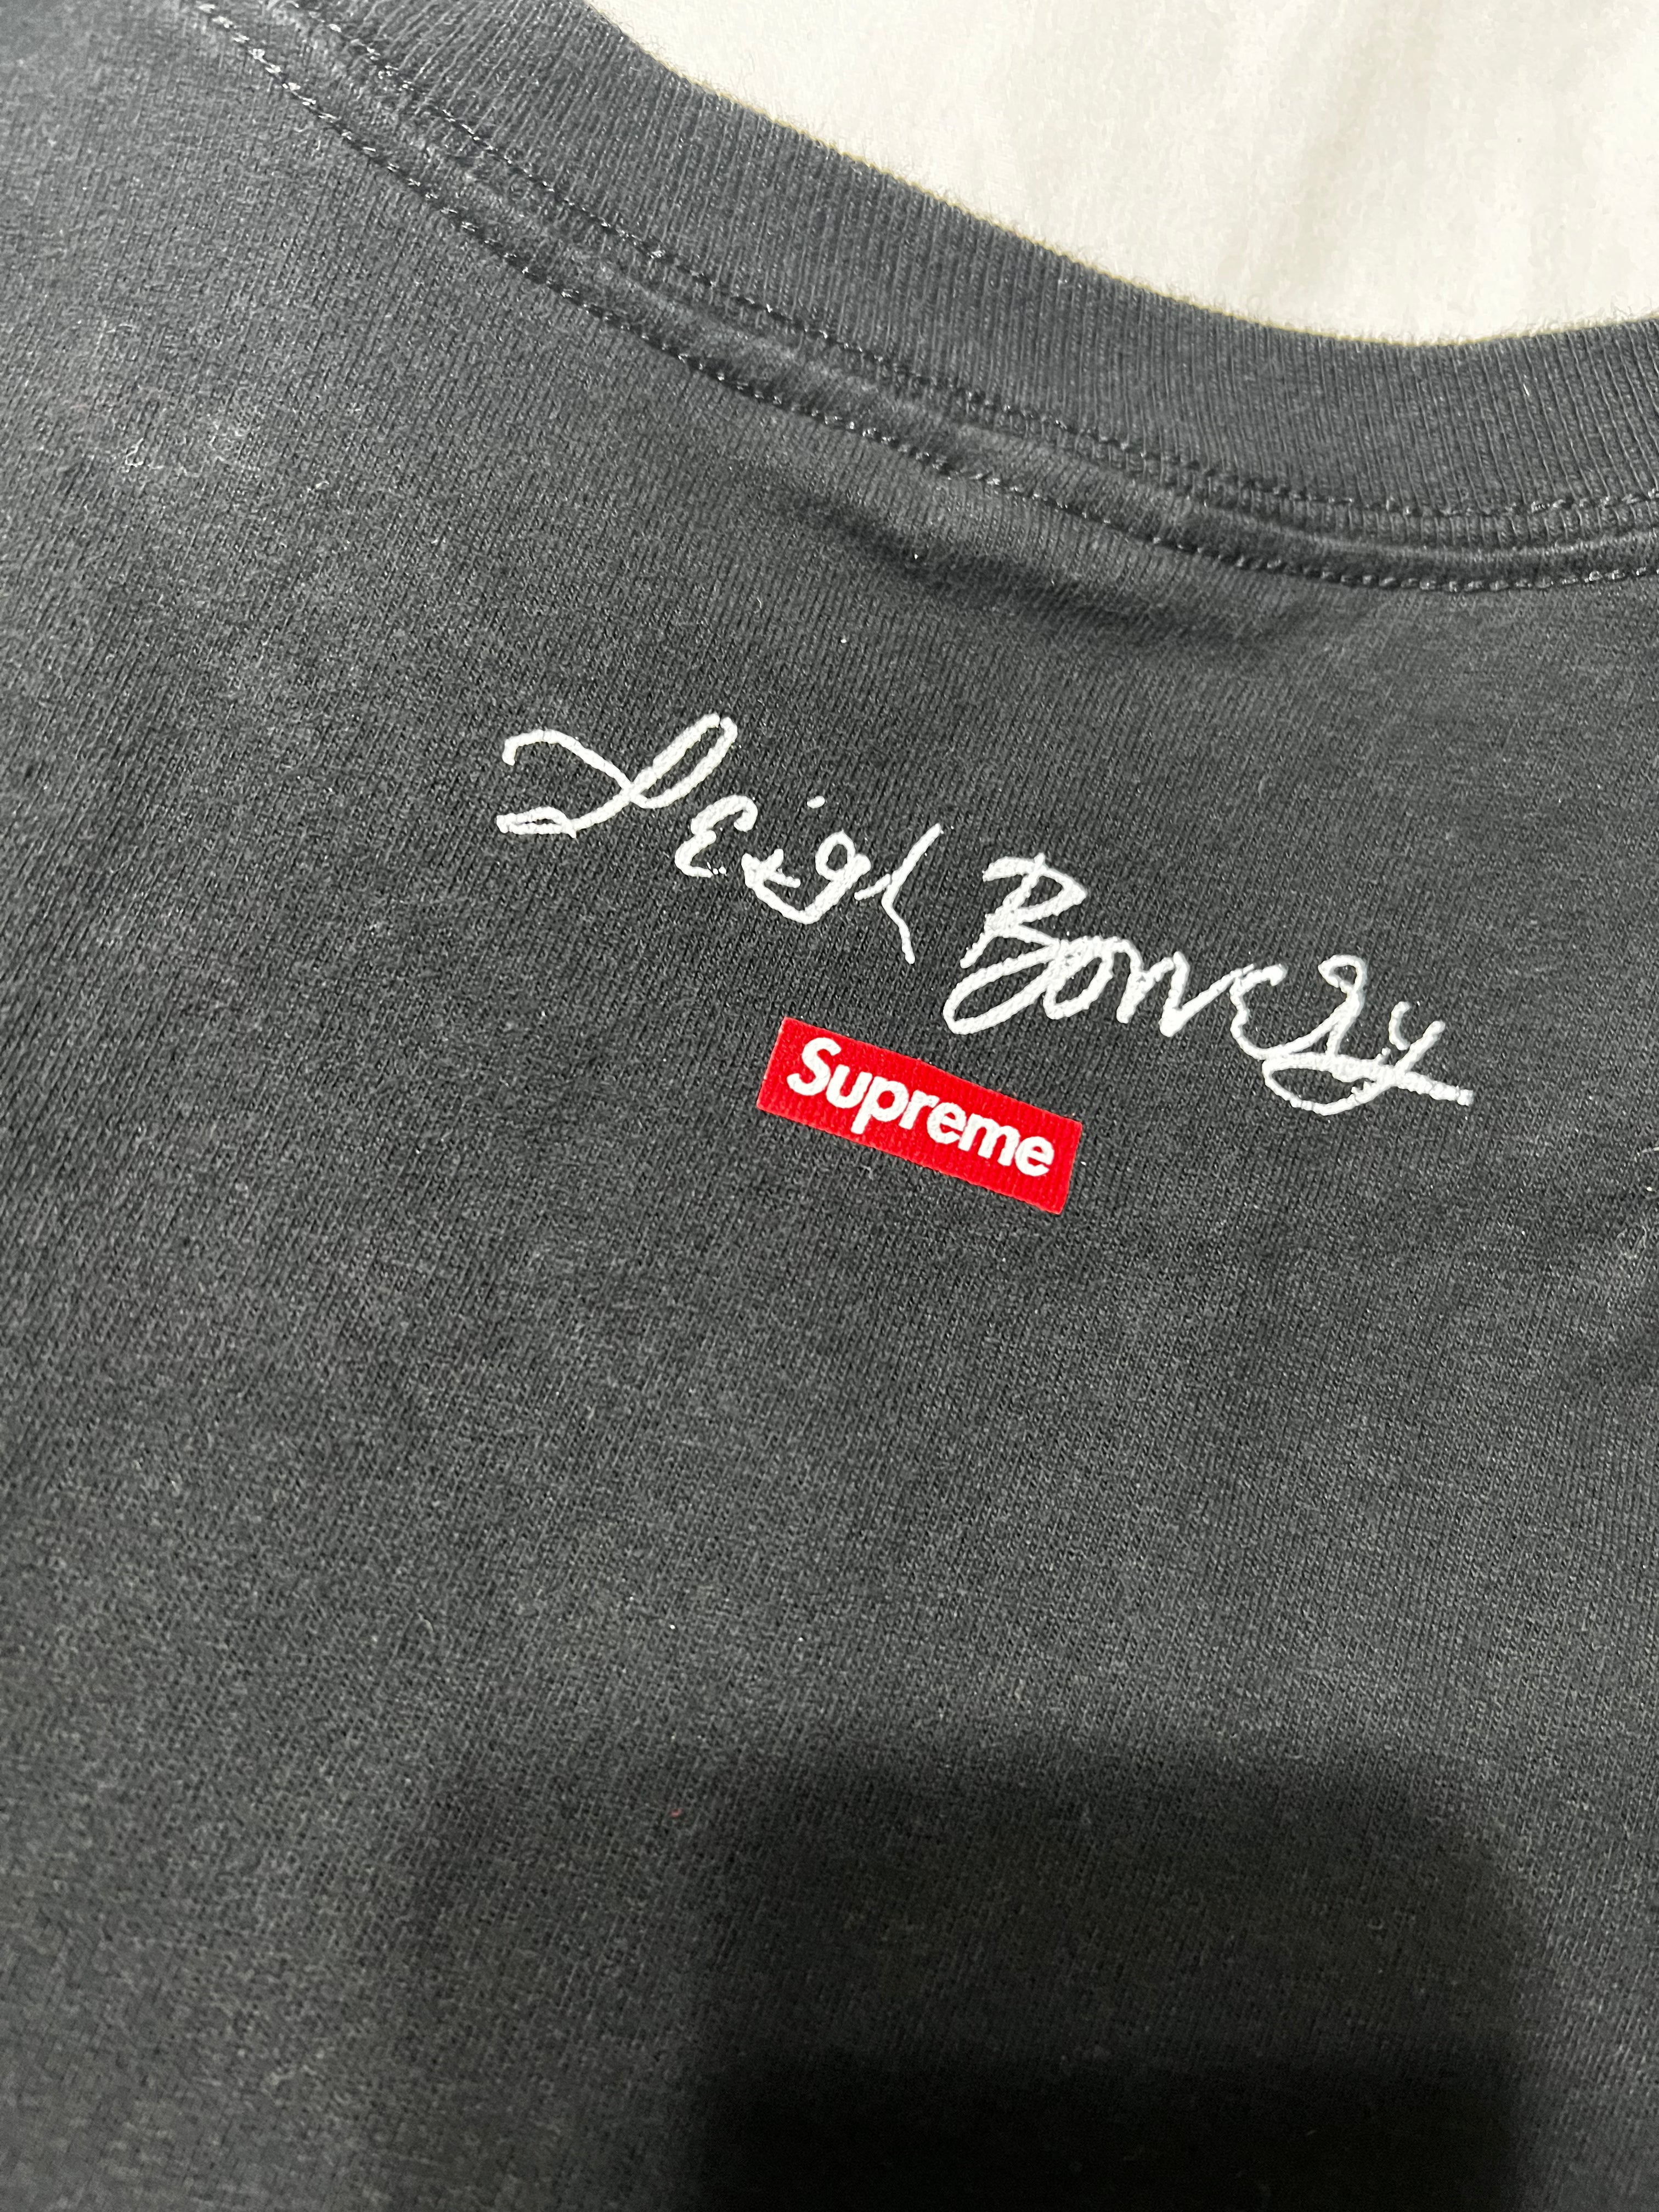 Surpeme/Leigh Bowery T-Shirt Black XL